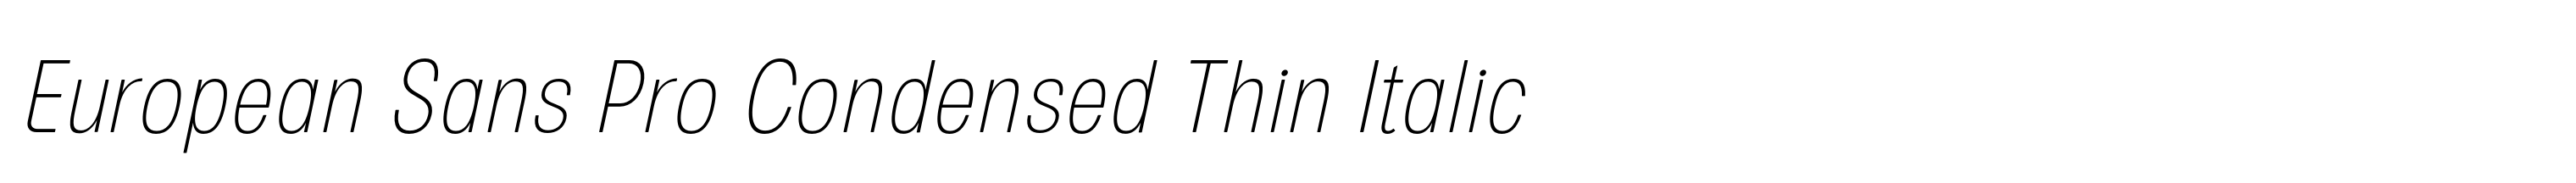 European Sans Pro Condensed Thin Italic